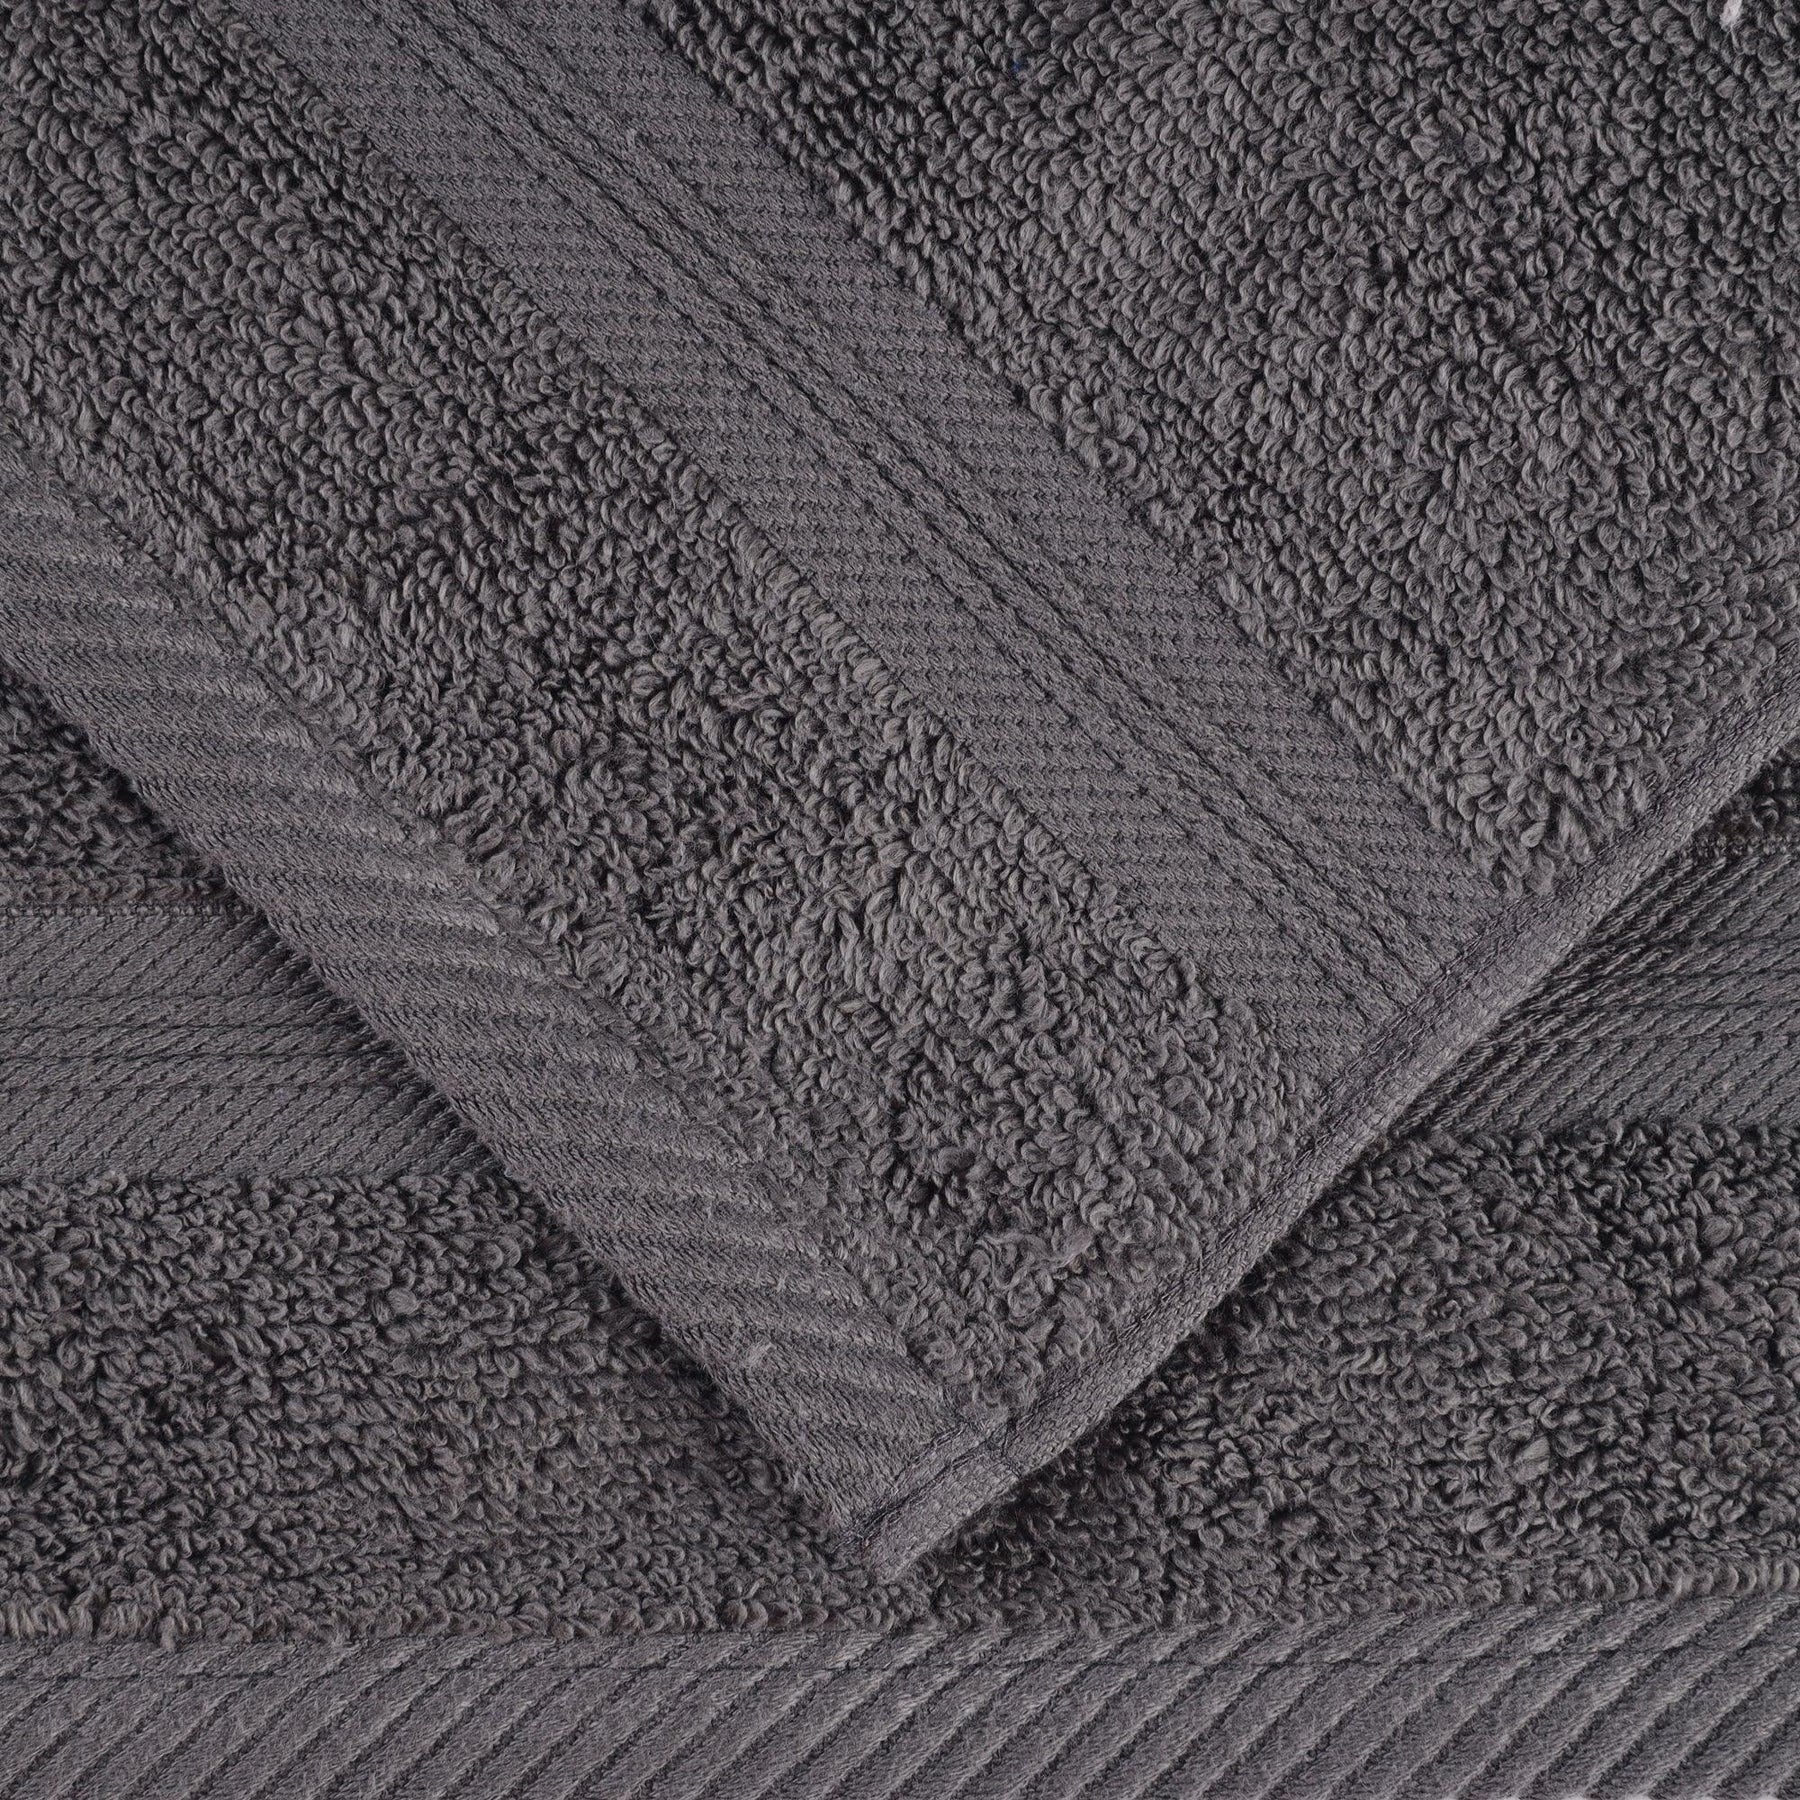  Superior Smart Dry Zero Twist Cotton 6-Piece Assorted Towel Set - Grey